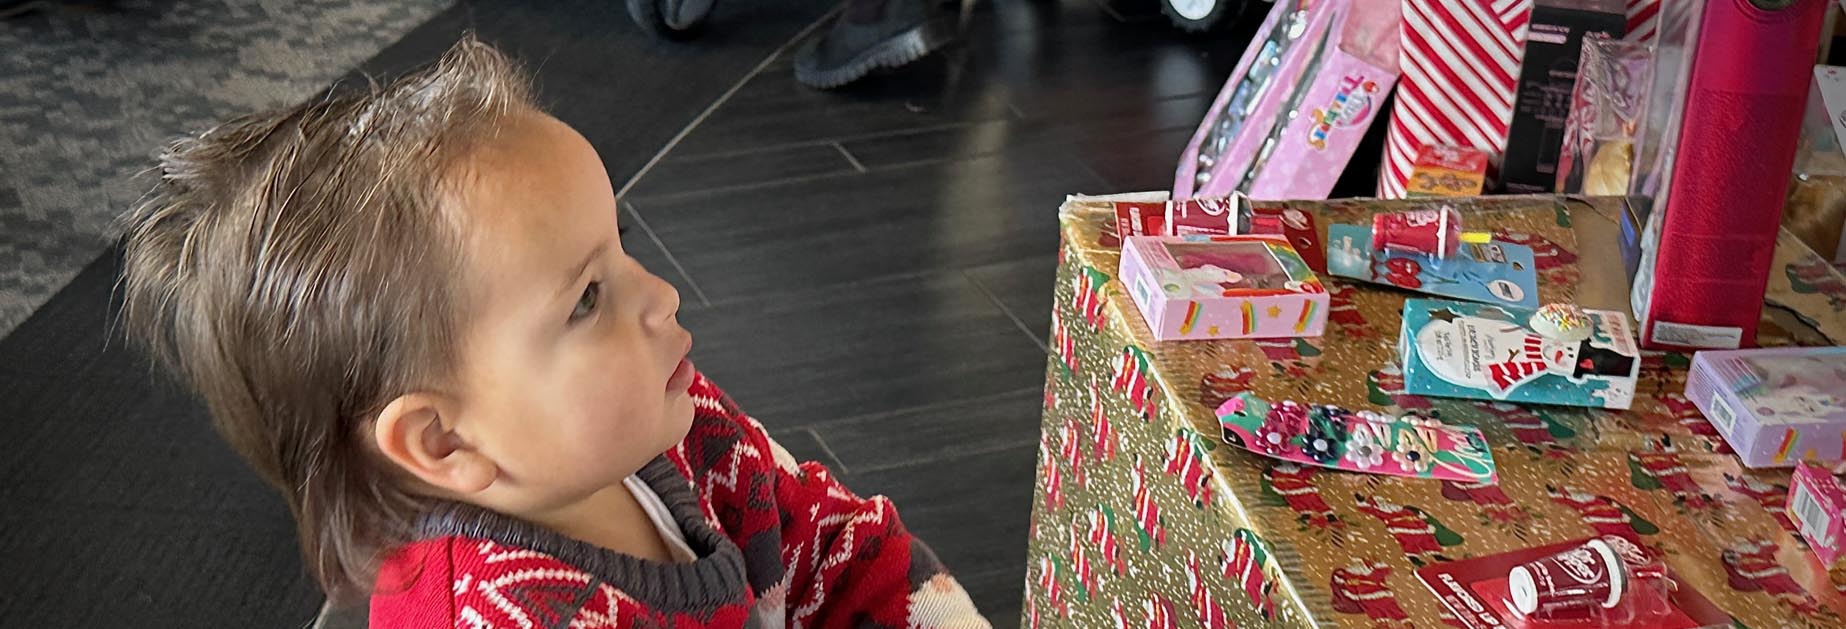 Un bambino accanto a regali incartati